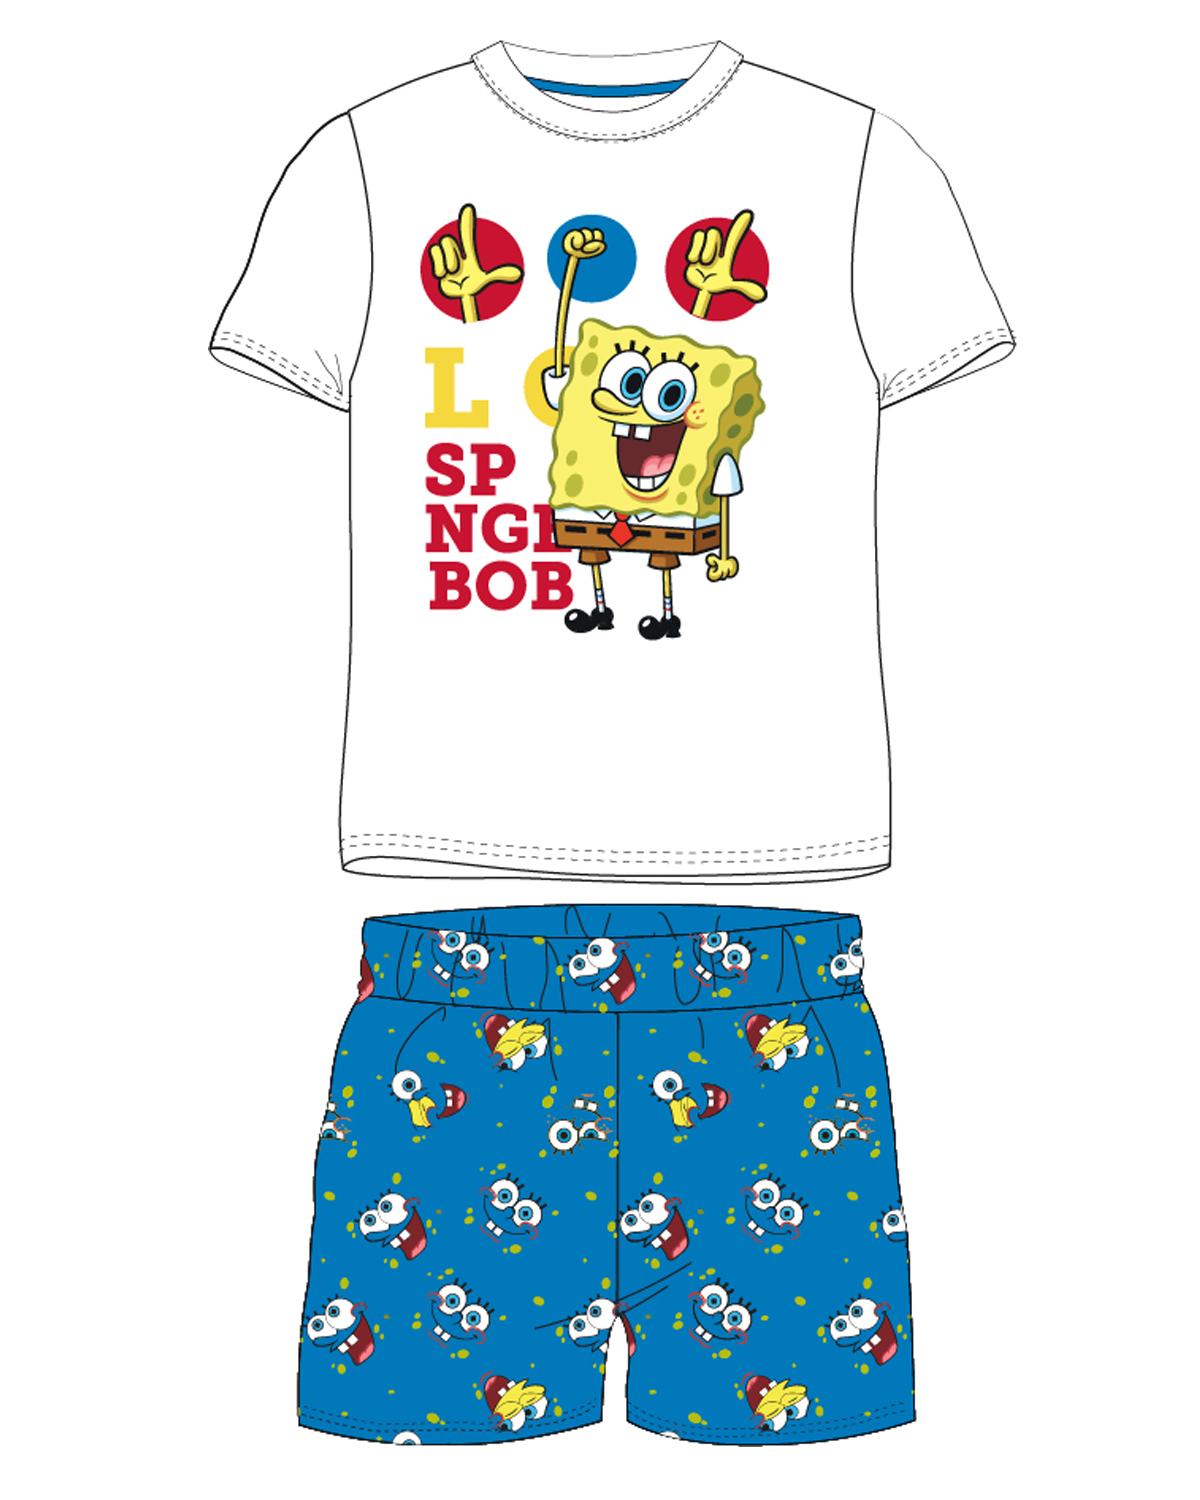 SpongeBob v kalhotách - licence Chlapecké pyžamo - SpongeBob v kalhotách 5204203W, bílá / modrá Barva: Mix barev, Velikost: 116